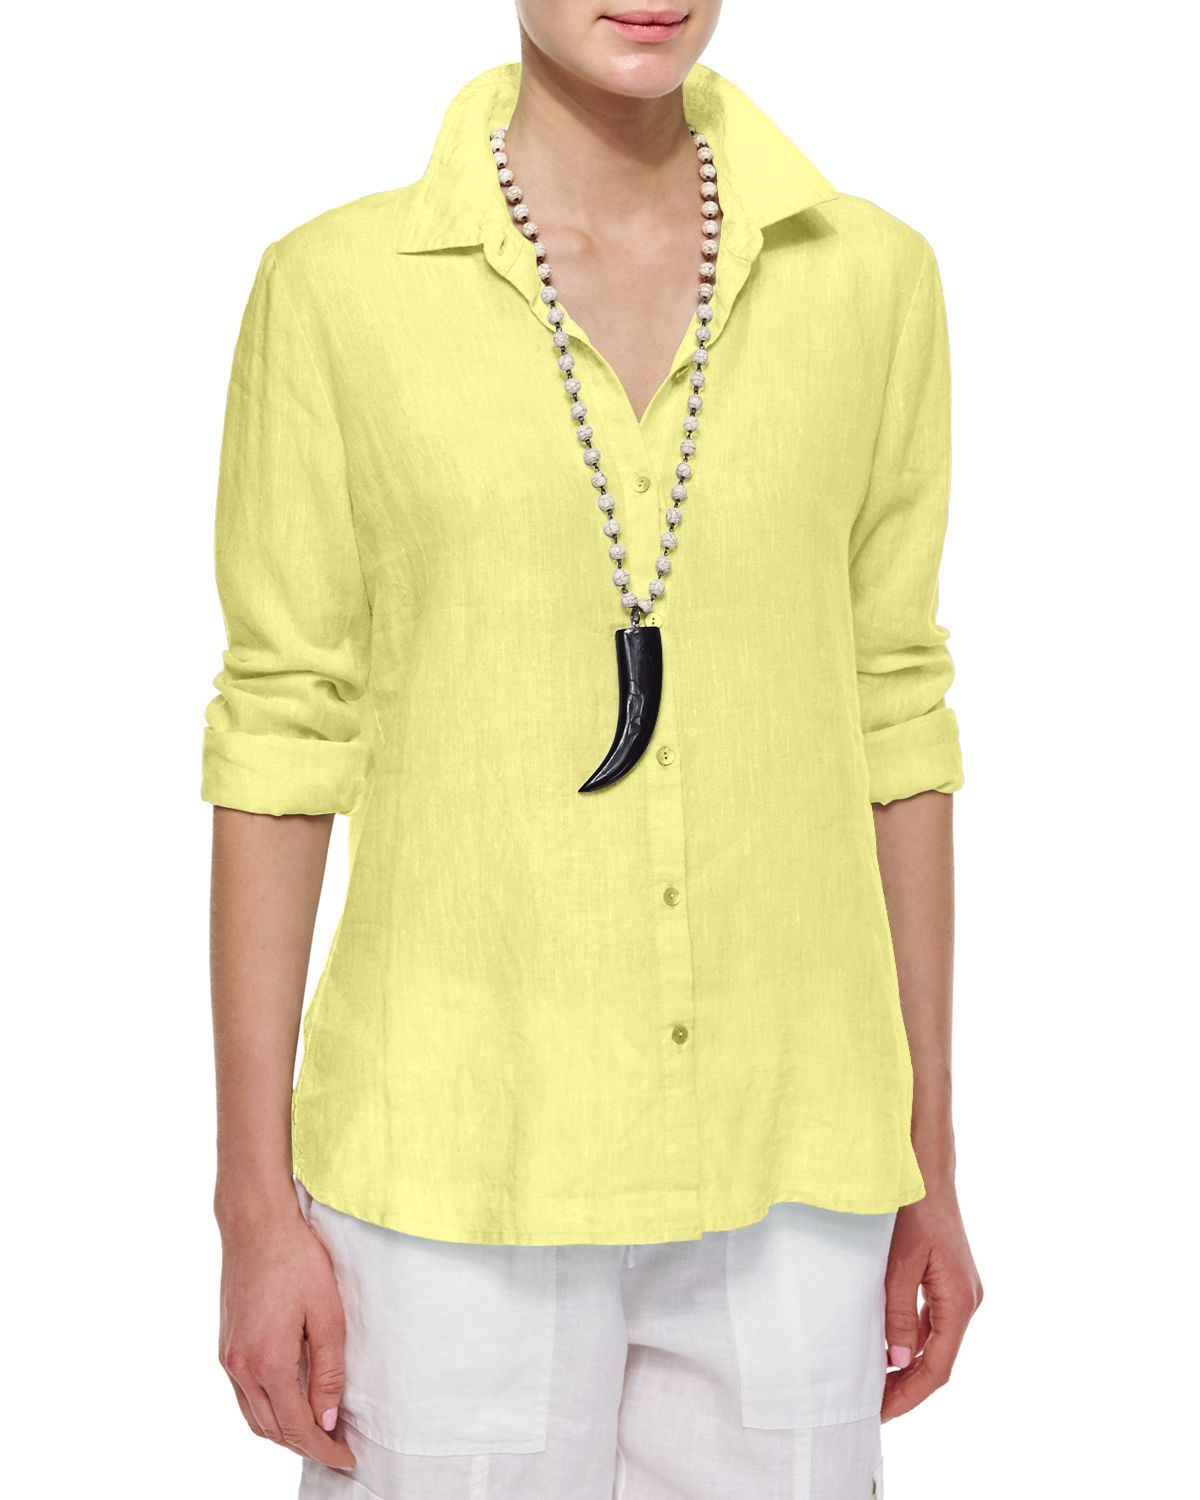 Lyst - Eileen Fisher Long-sleeve Button-front Linen Shirt in Yellow